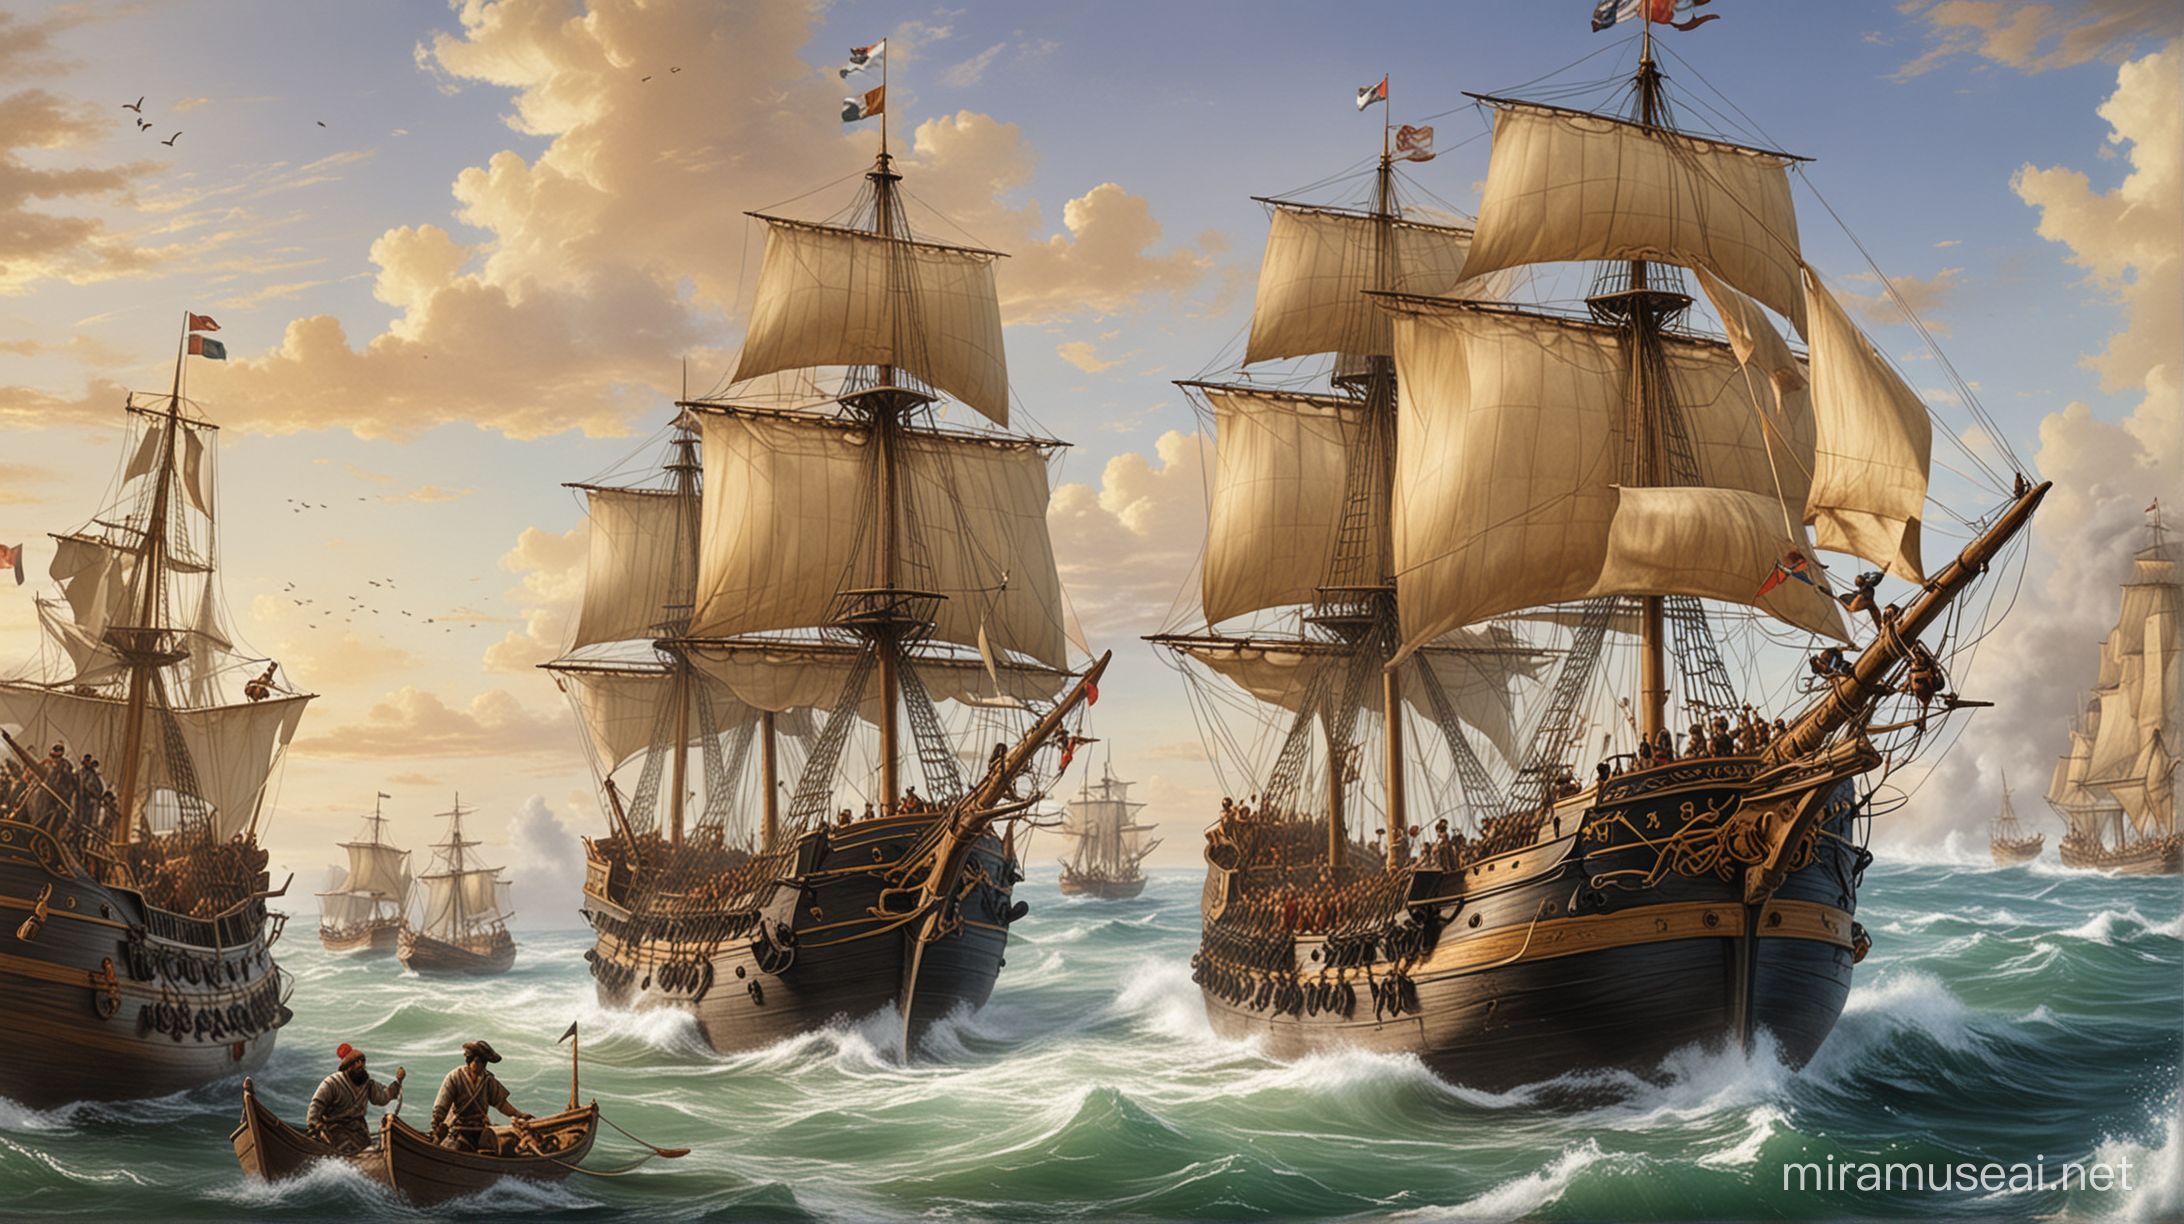 Explorers Vasco da Gama and Magellan Discovering New Routes